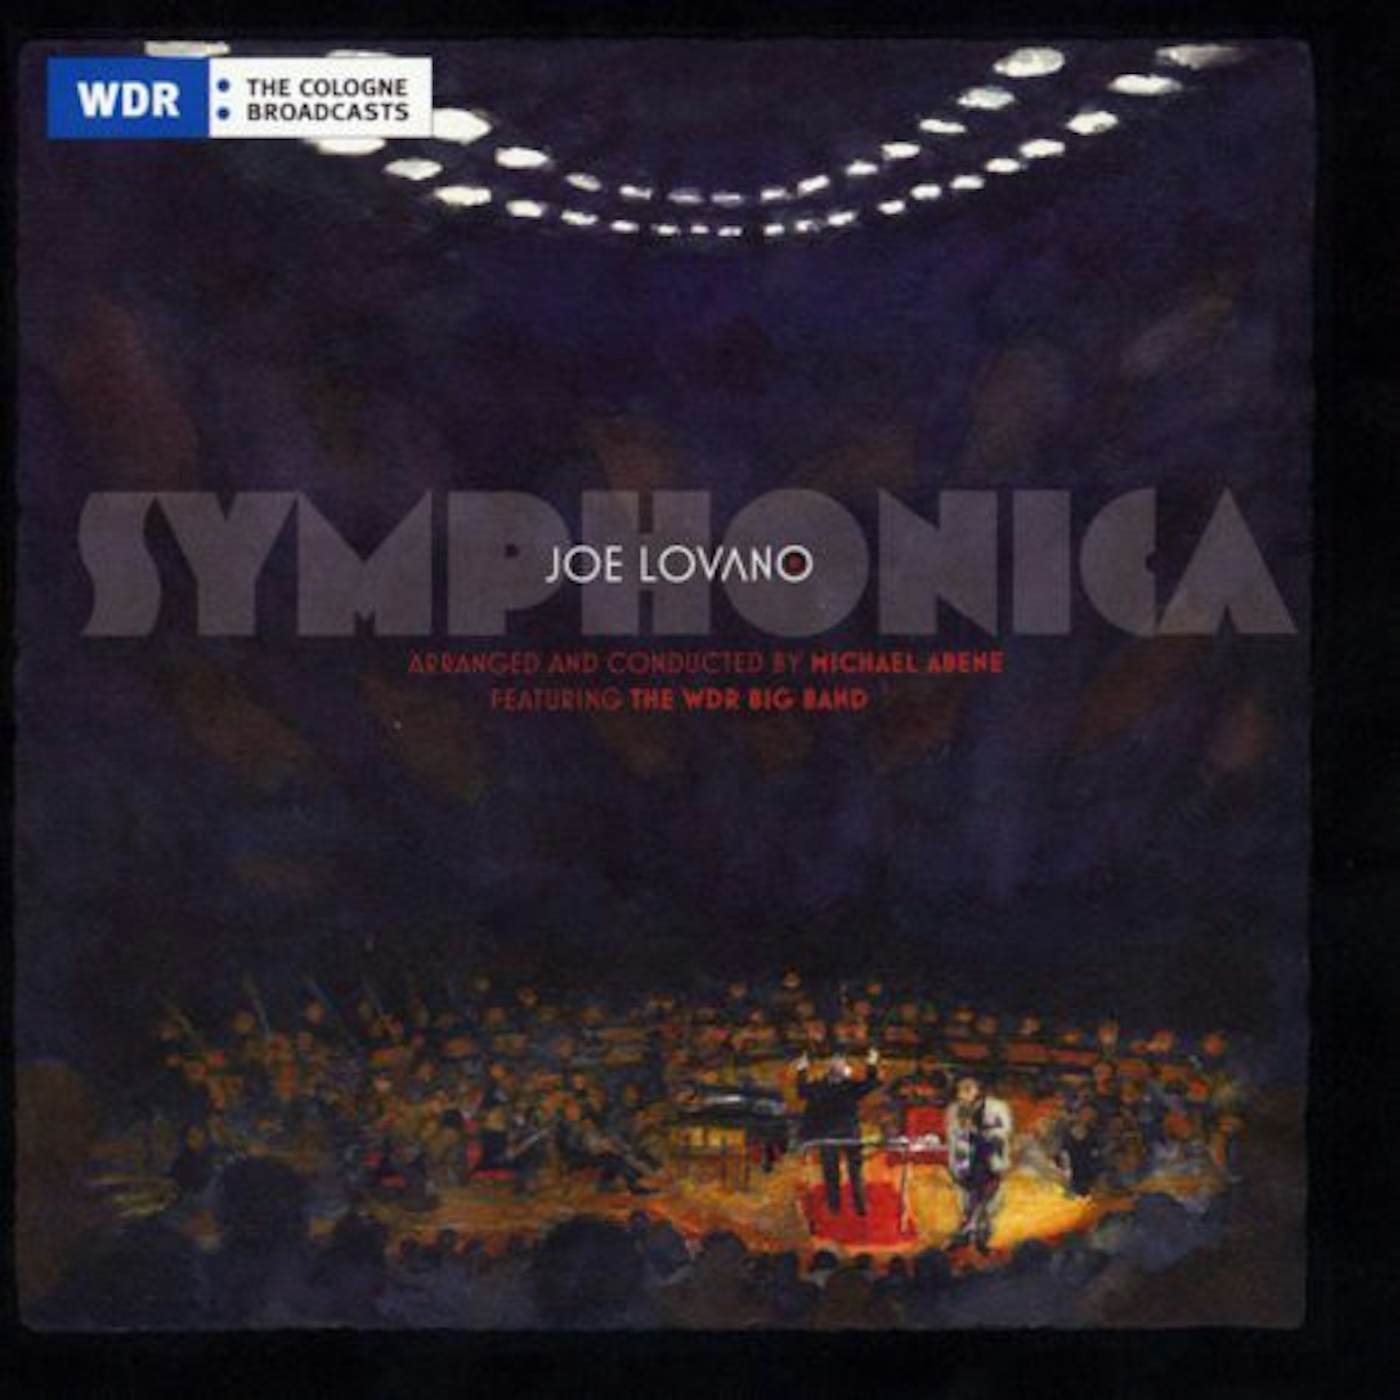 Joe Lovano SYMPHONICA CD